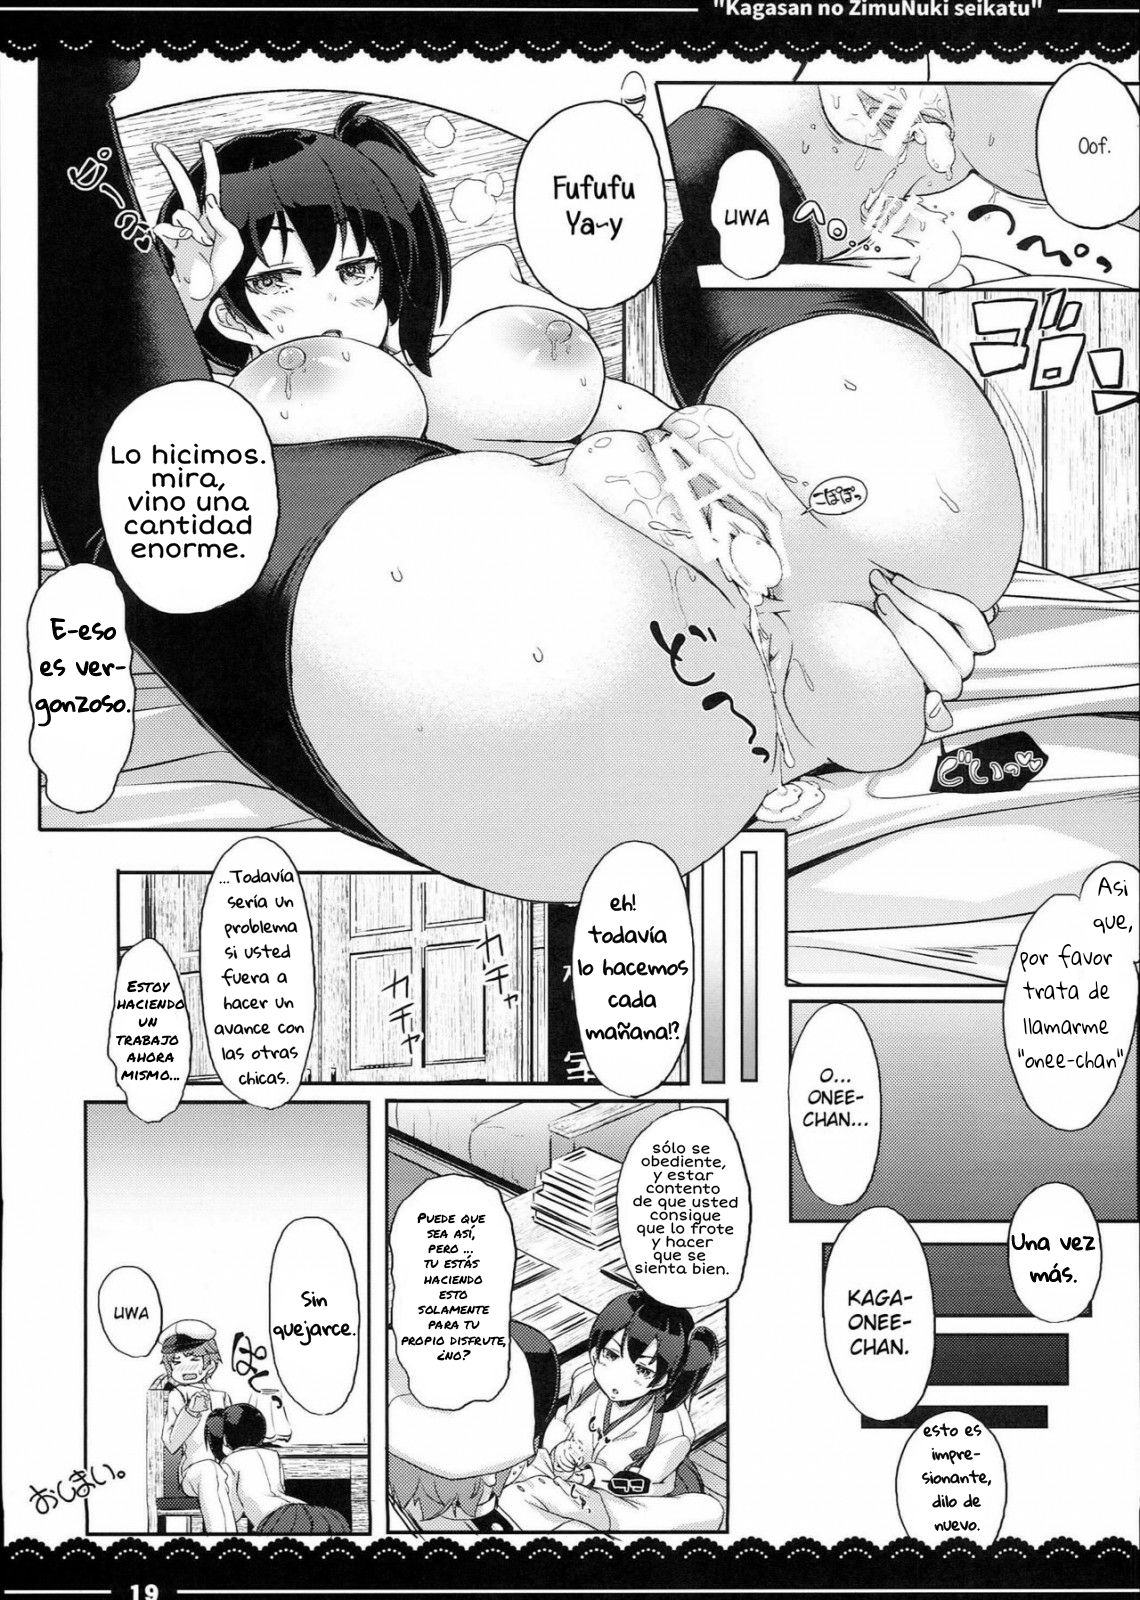 kaga-san's work skipping sex life-chapter 1 - 19